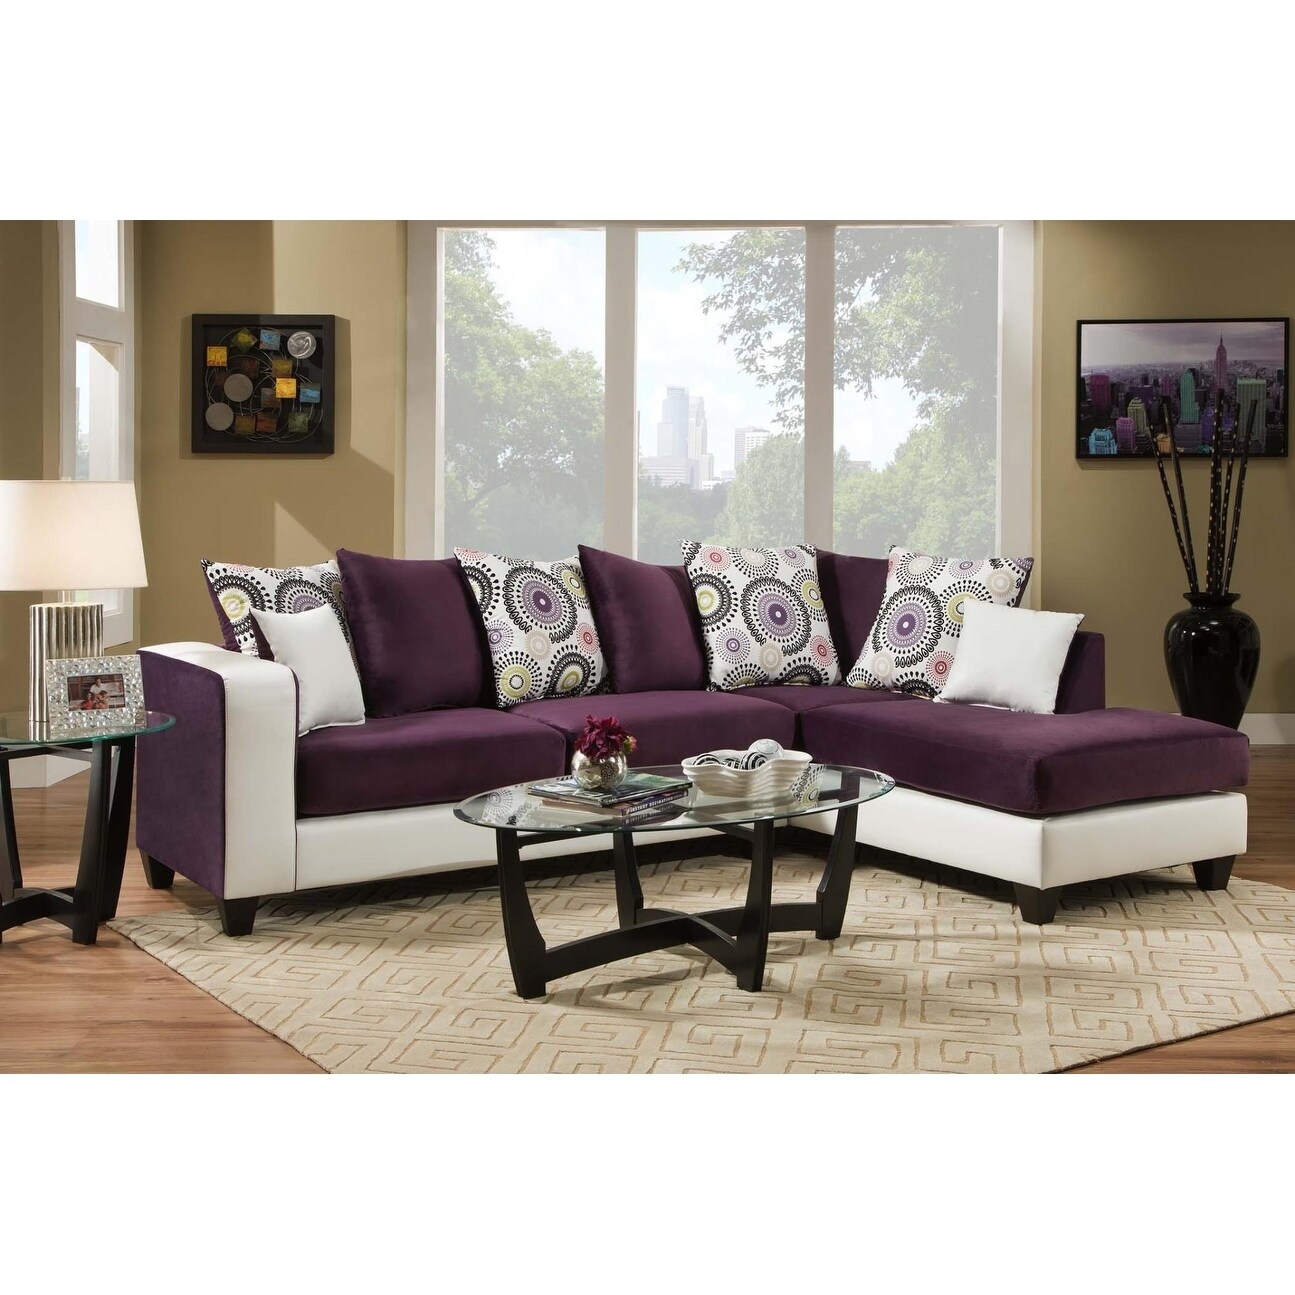 Shop Black Friday Deals On Sofatrendz Dessie Purple White Contemporary Sectional Overstock 20846572